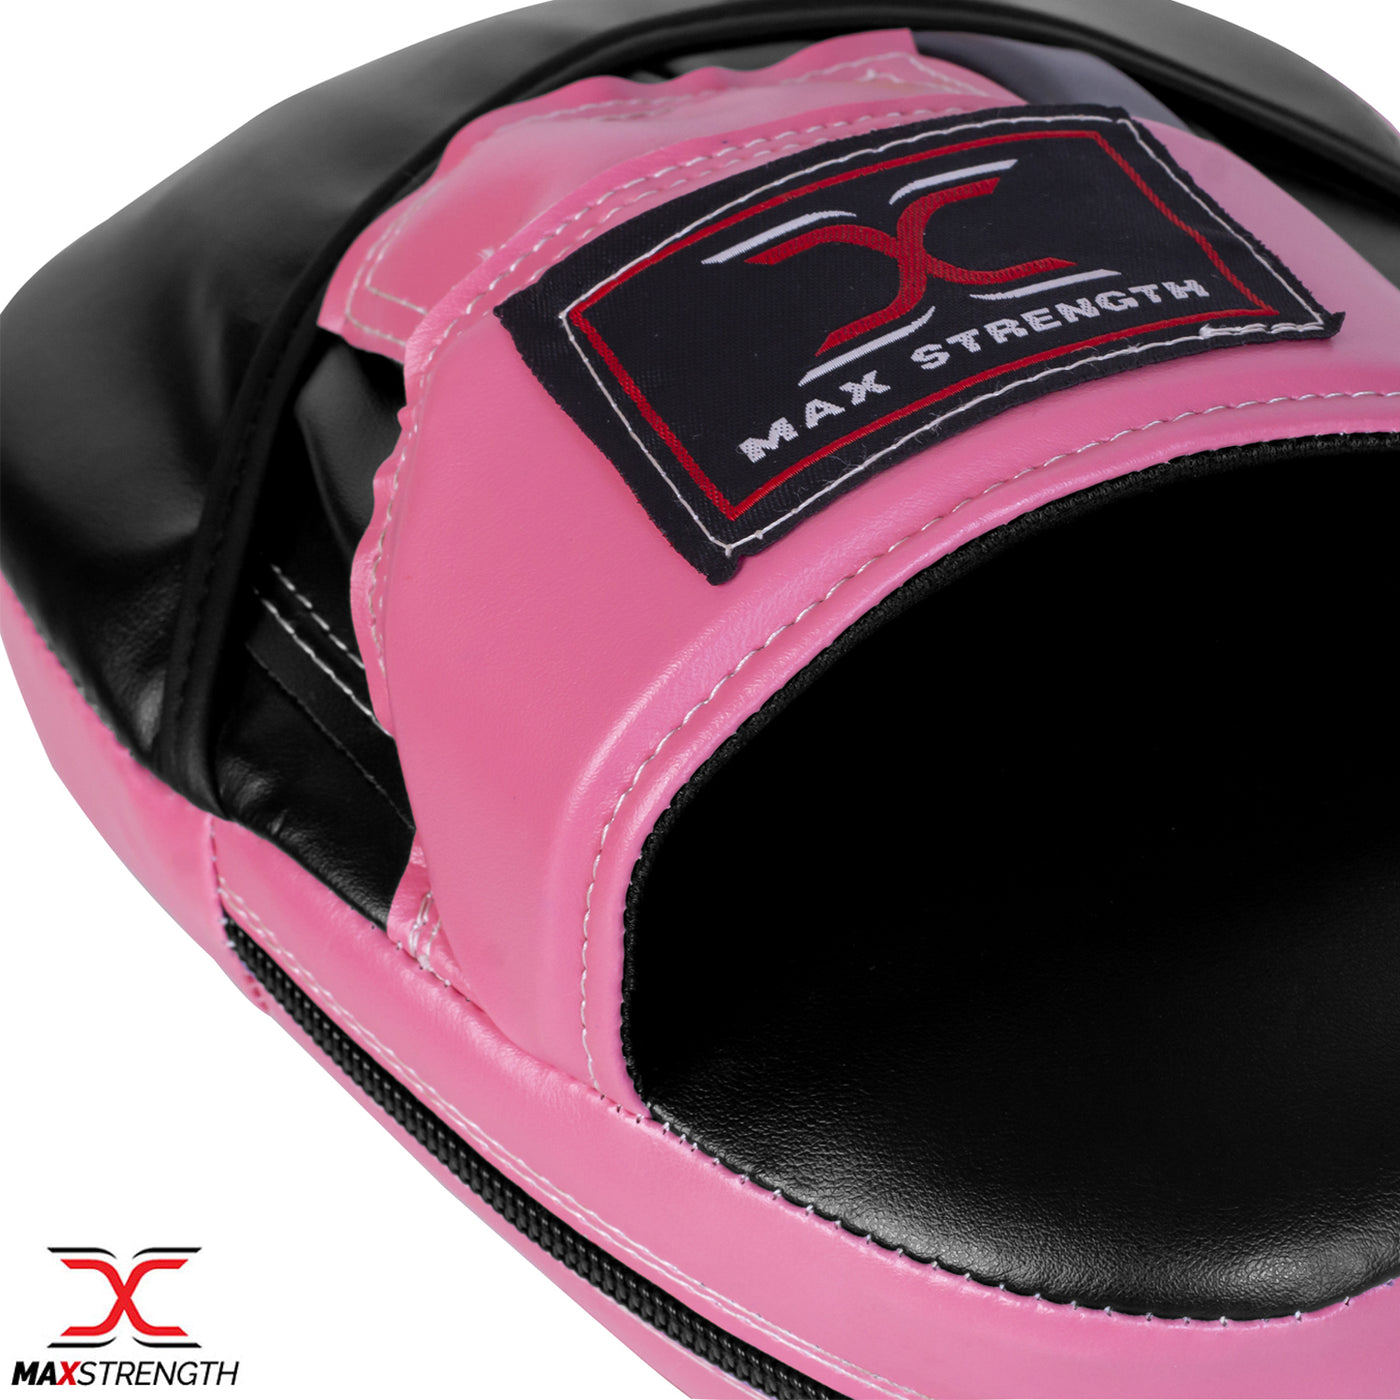 MaxStrength Boxing Gloves & Focus Pad Set (Pink/Black)